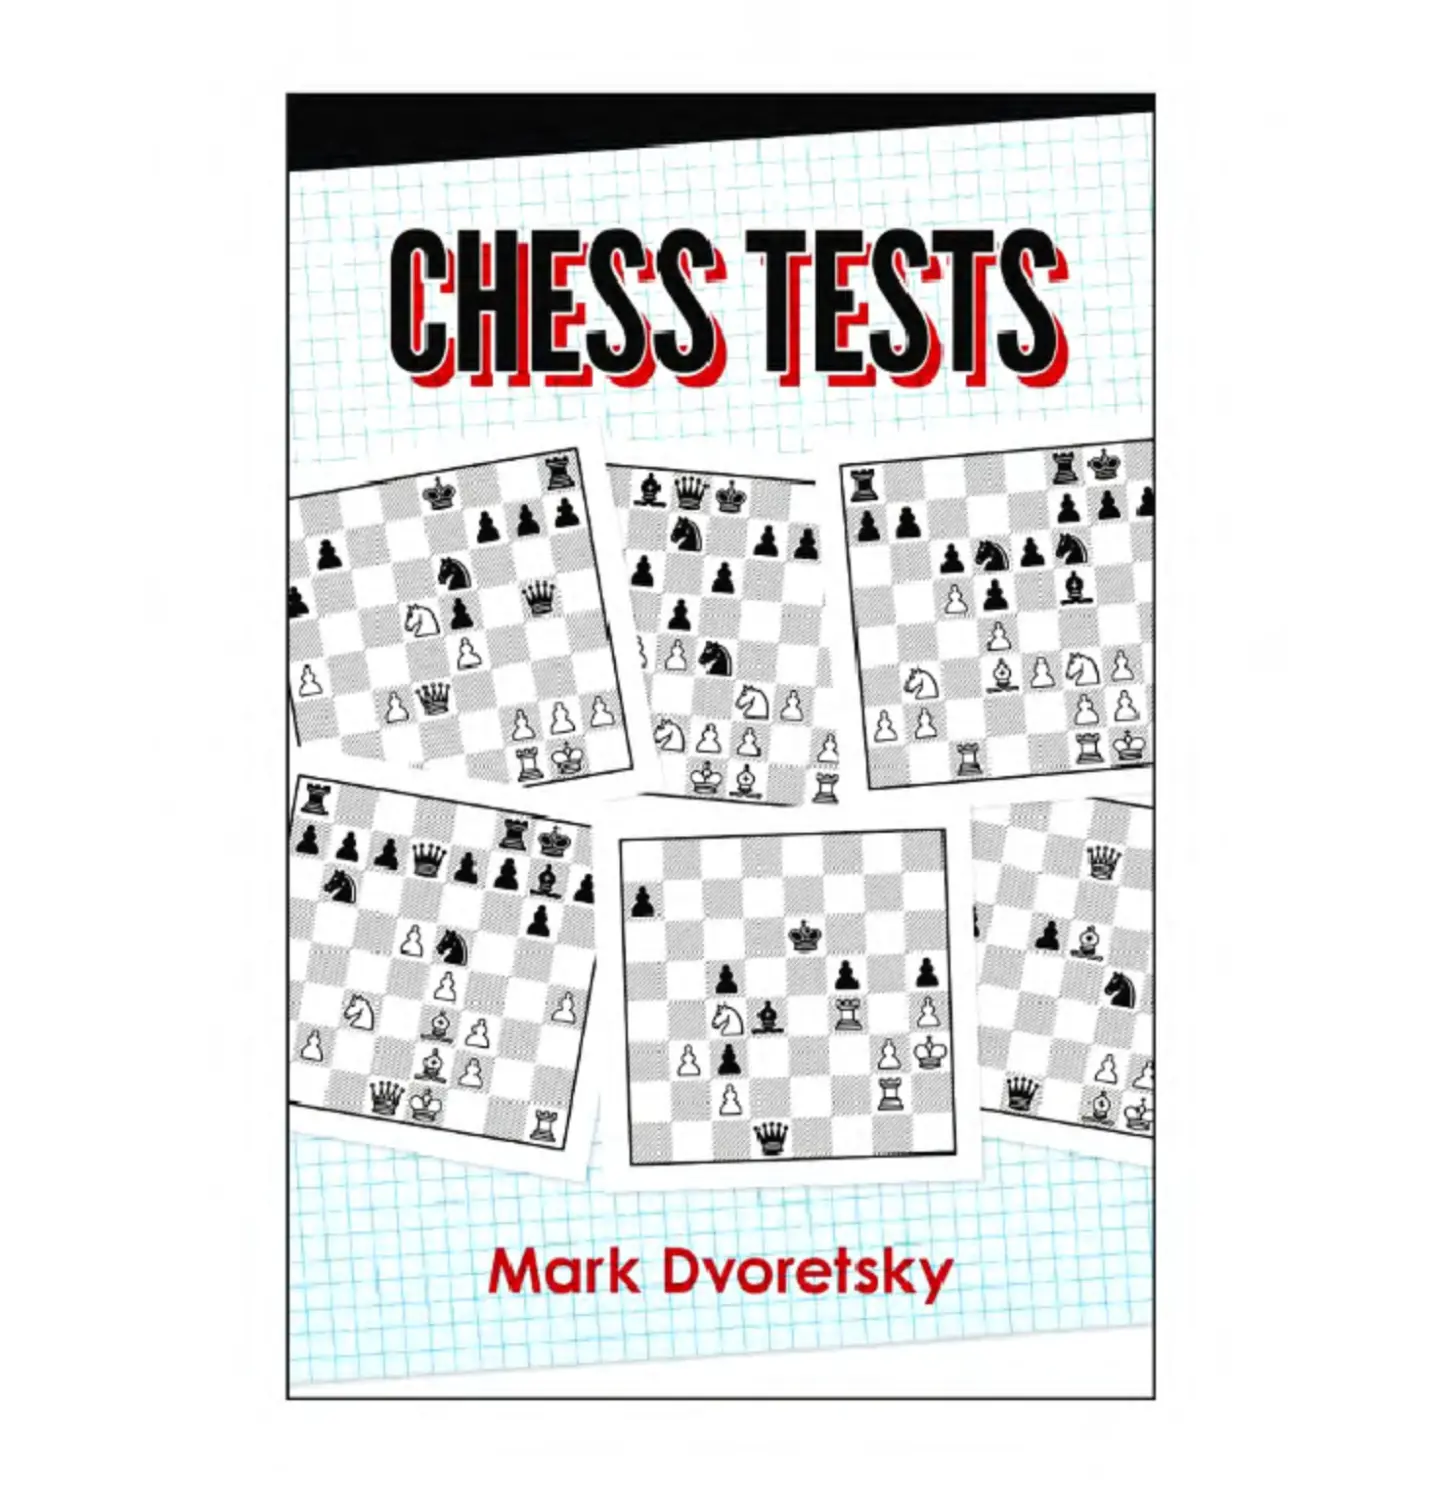 Chess Tests - M. Dvoretsky,2019